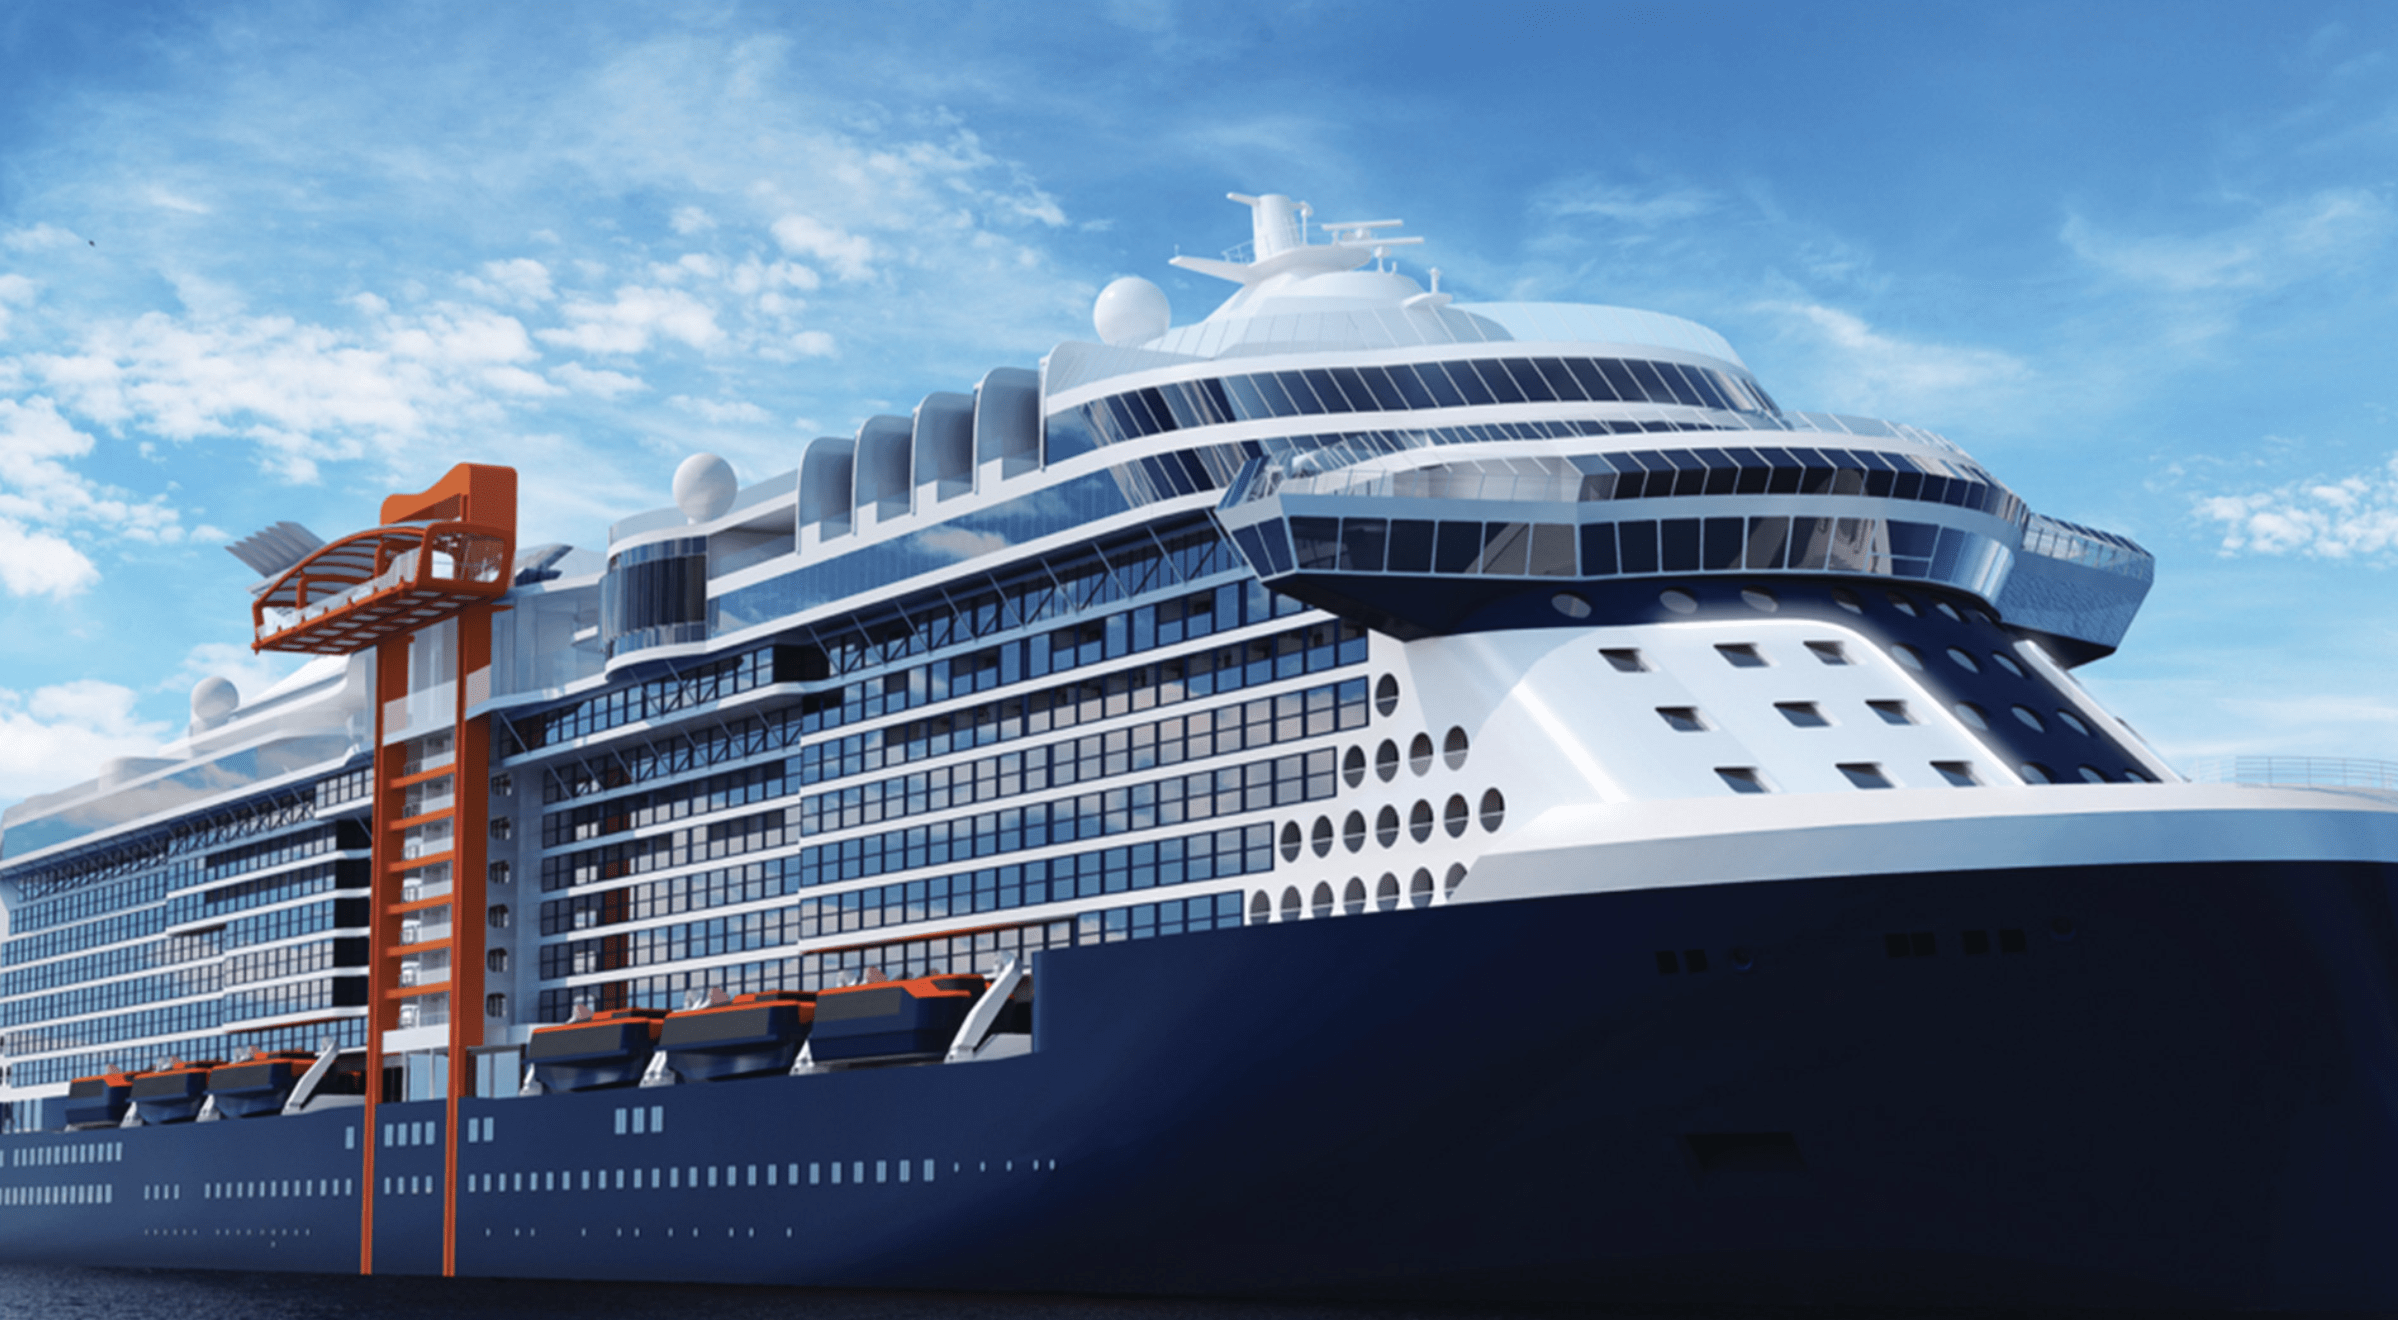 Celebrity Cruises expands Celebrity Edge's inaugural season